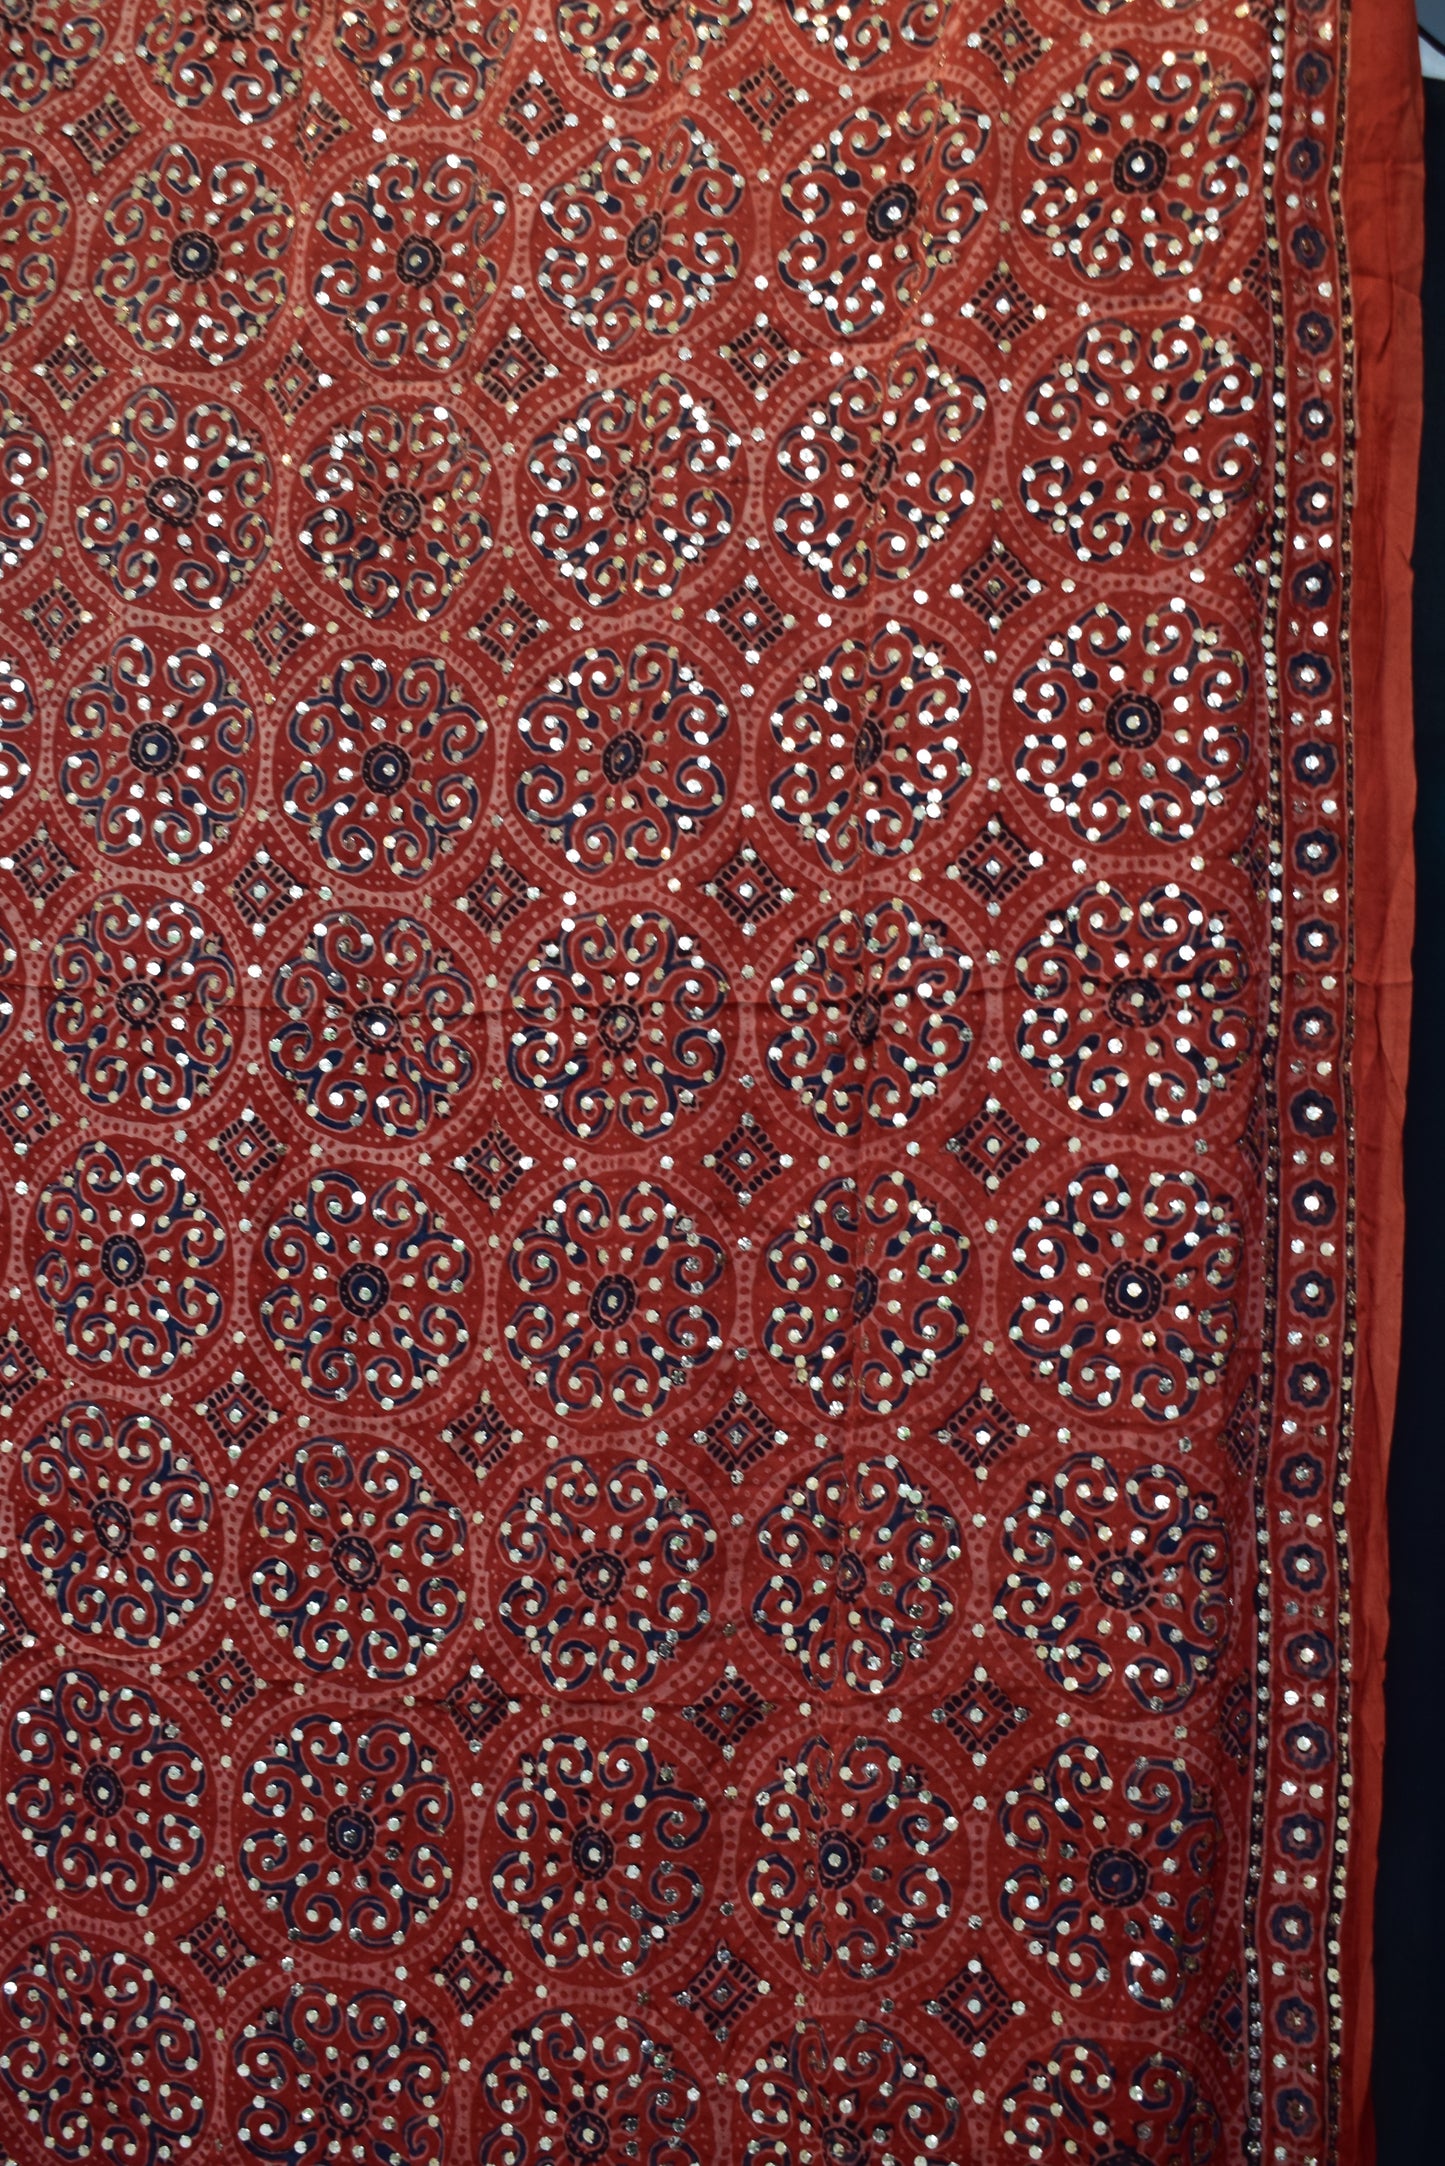 Rust modal silk ajrakh block printed dupatta with heavy mukaish